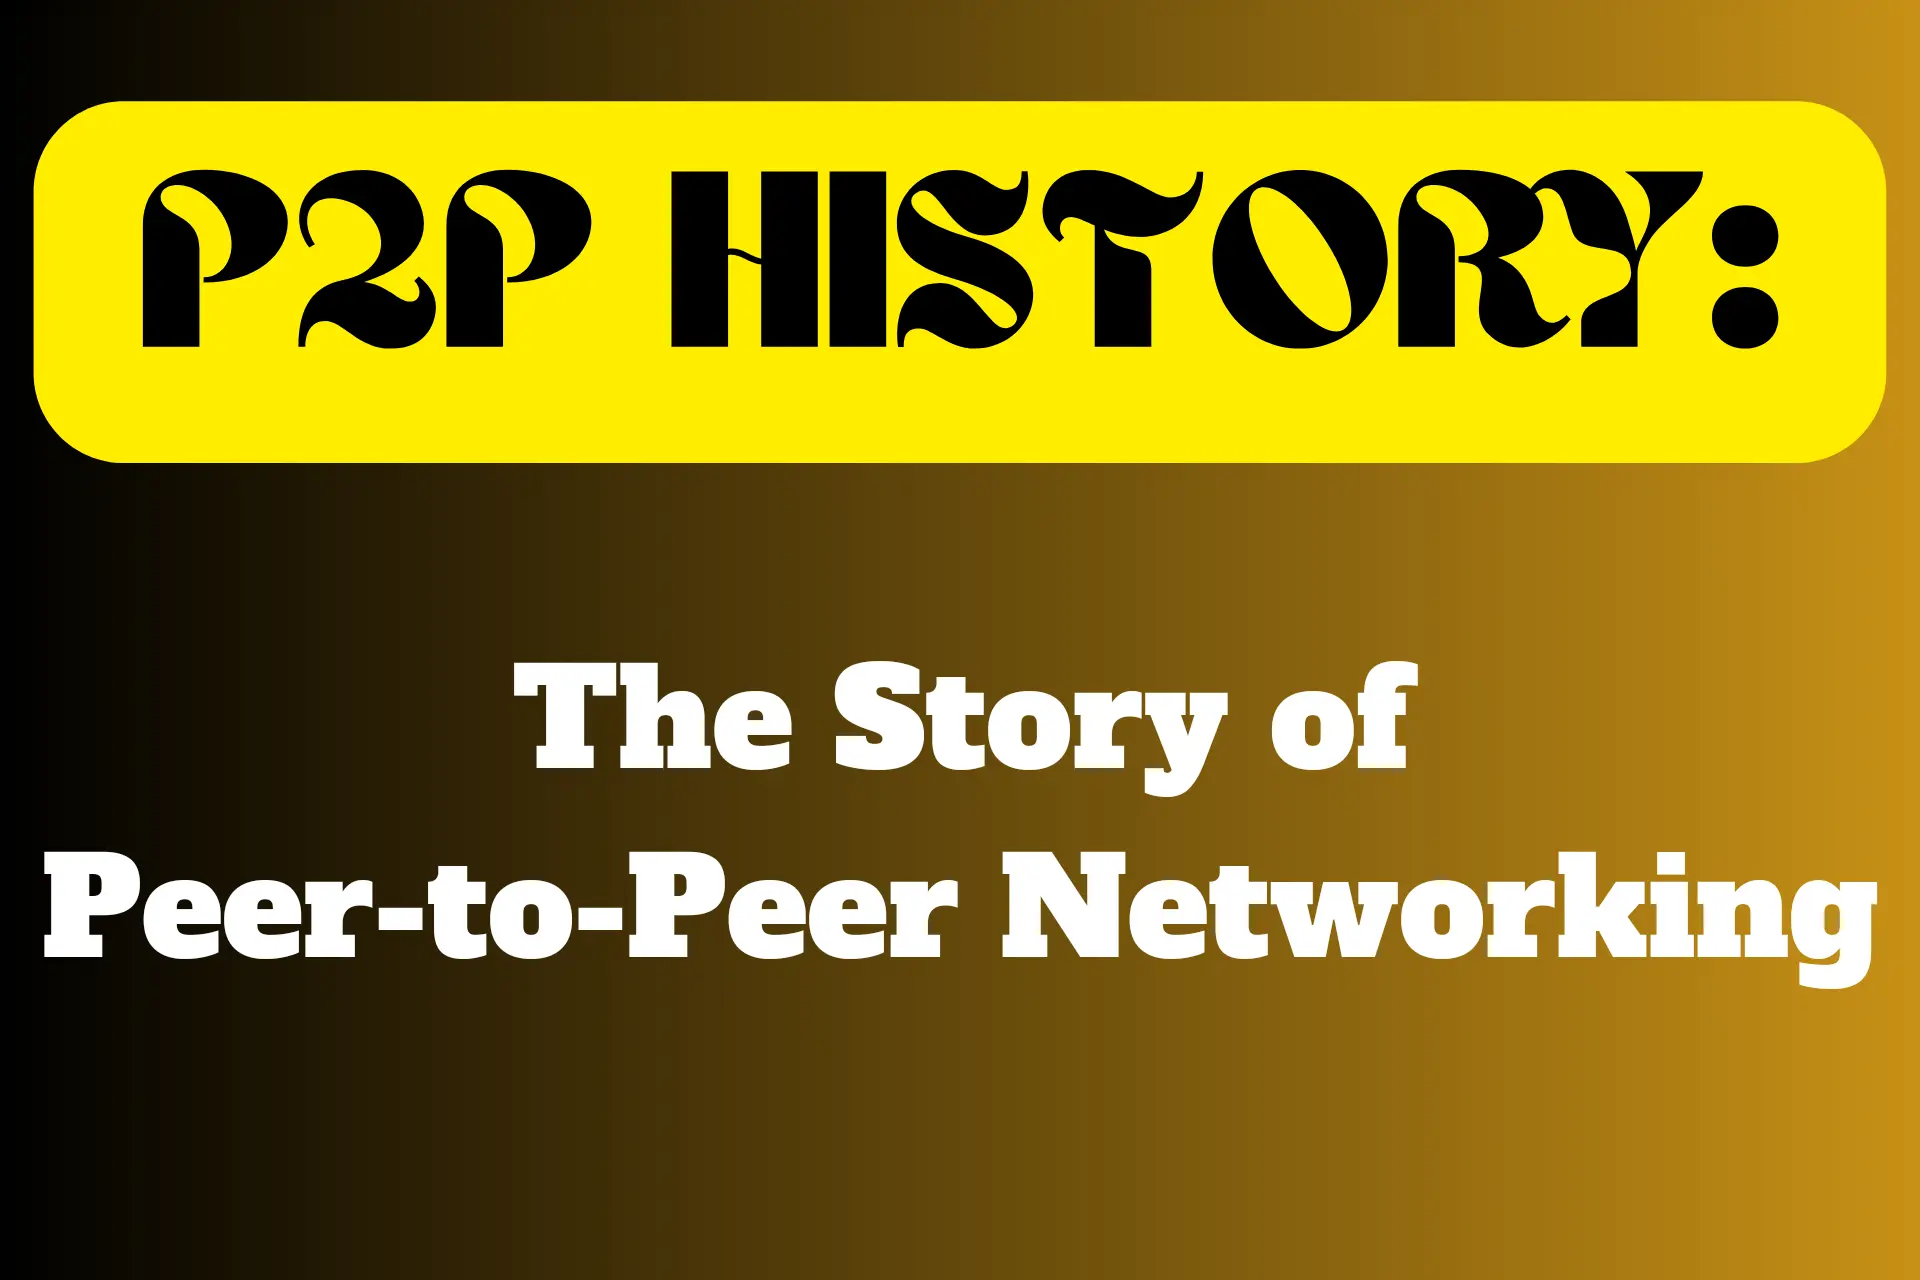 P2P history